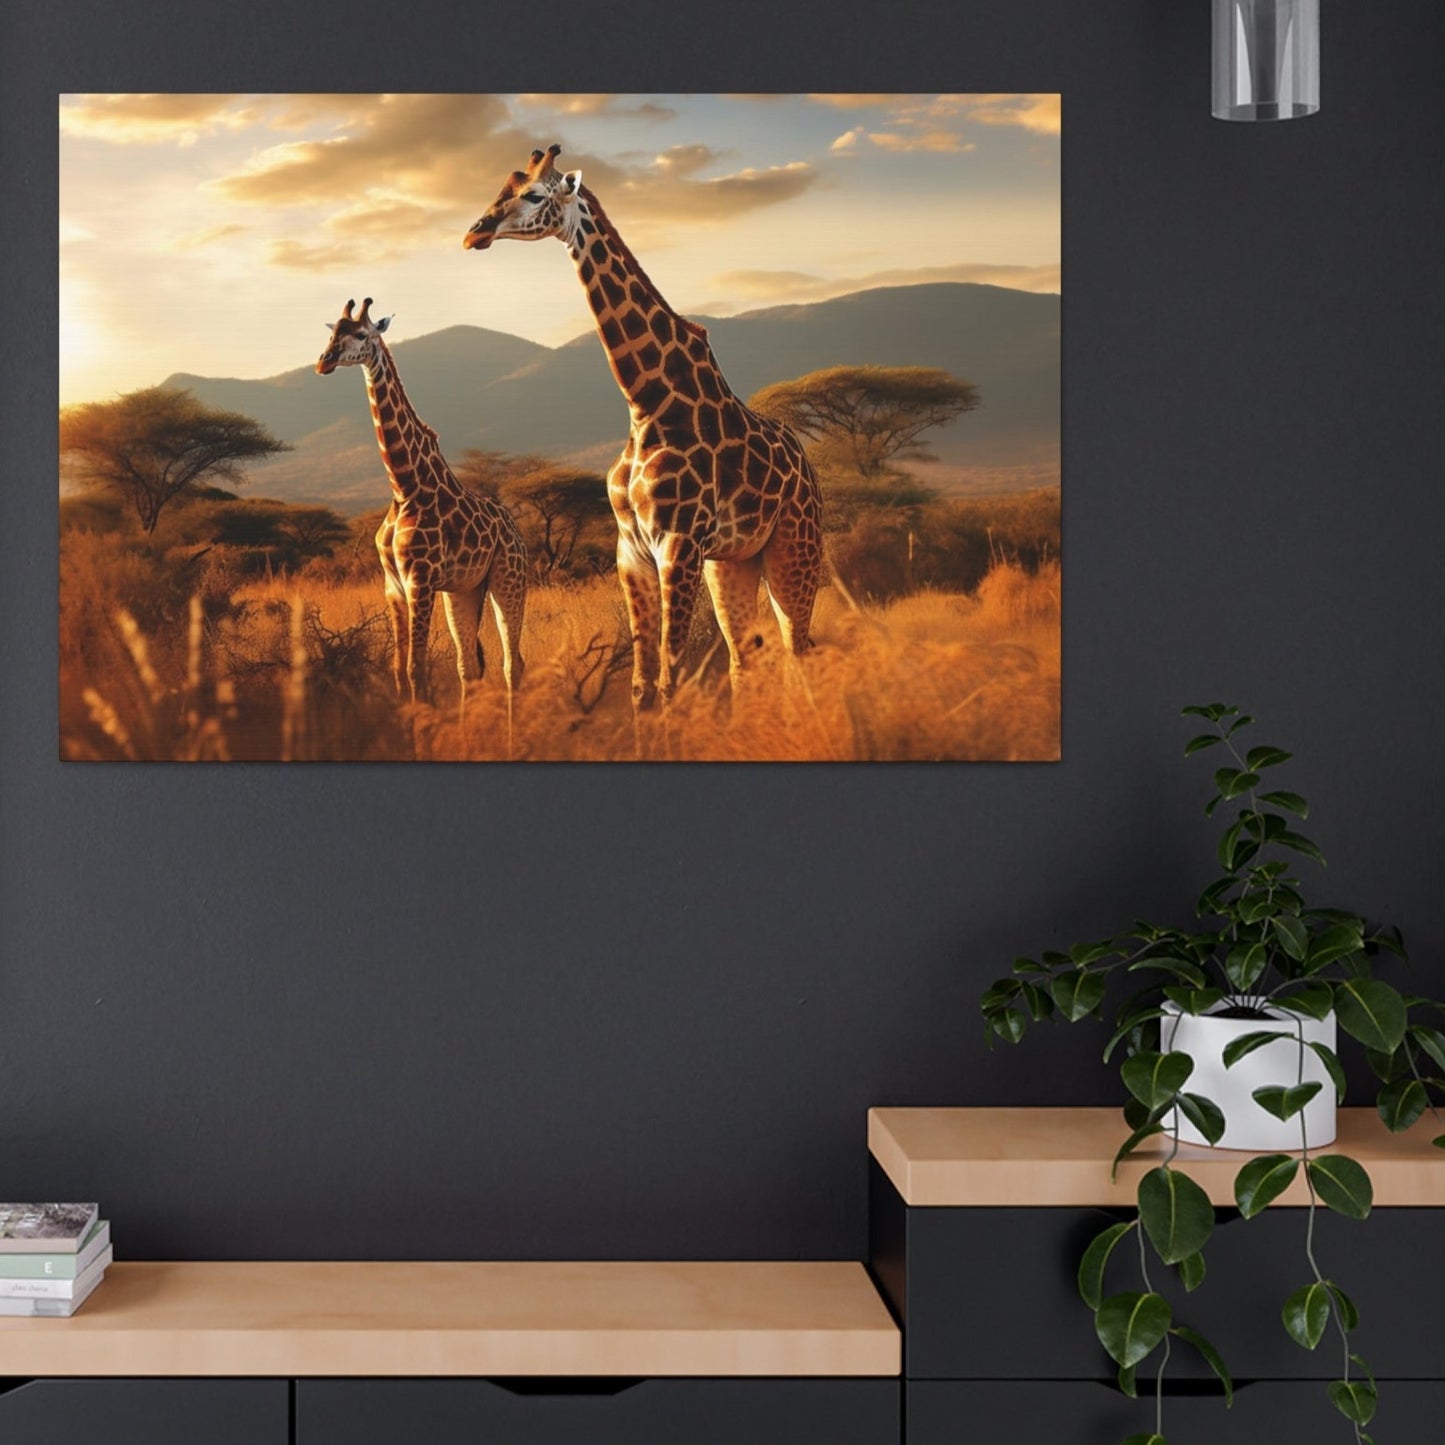 colorful giraffe indoor decor